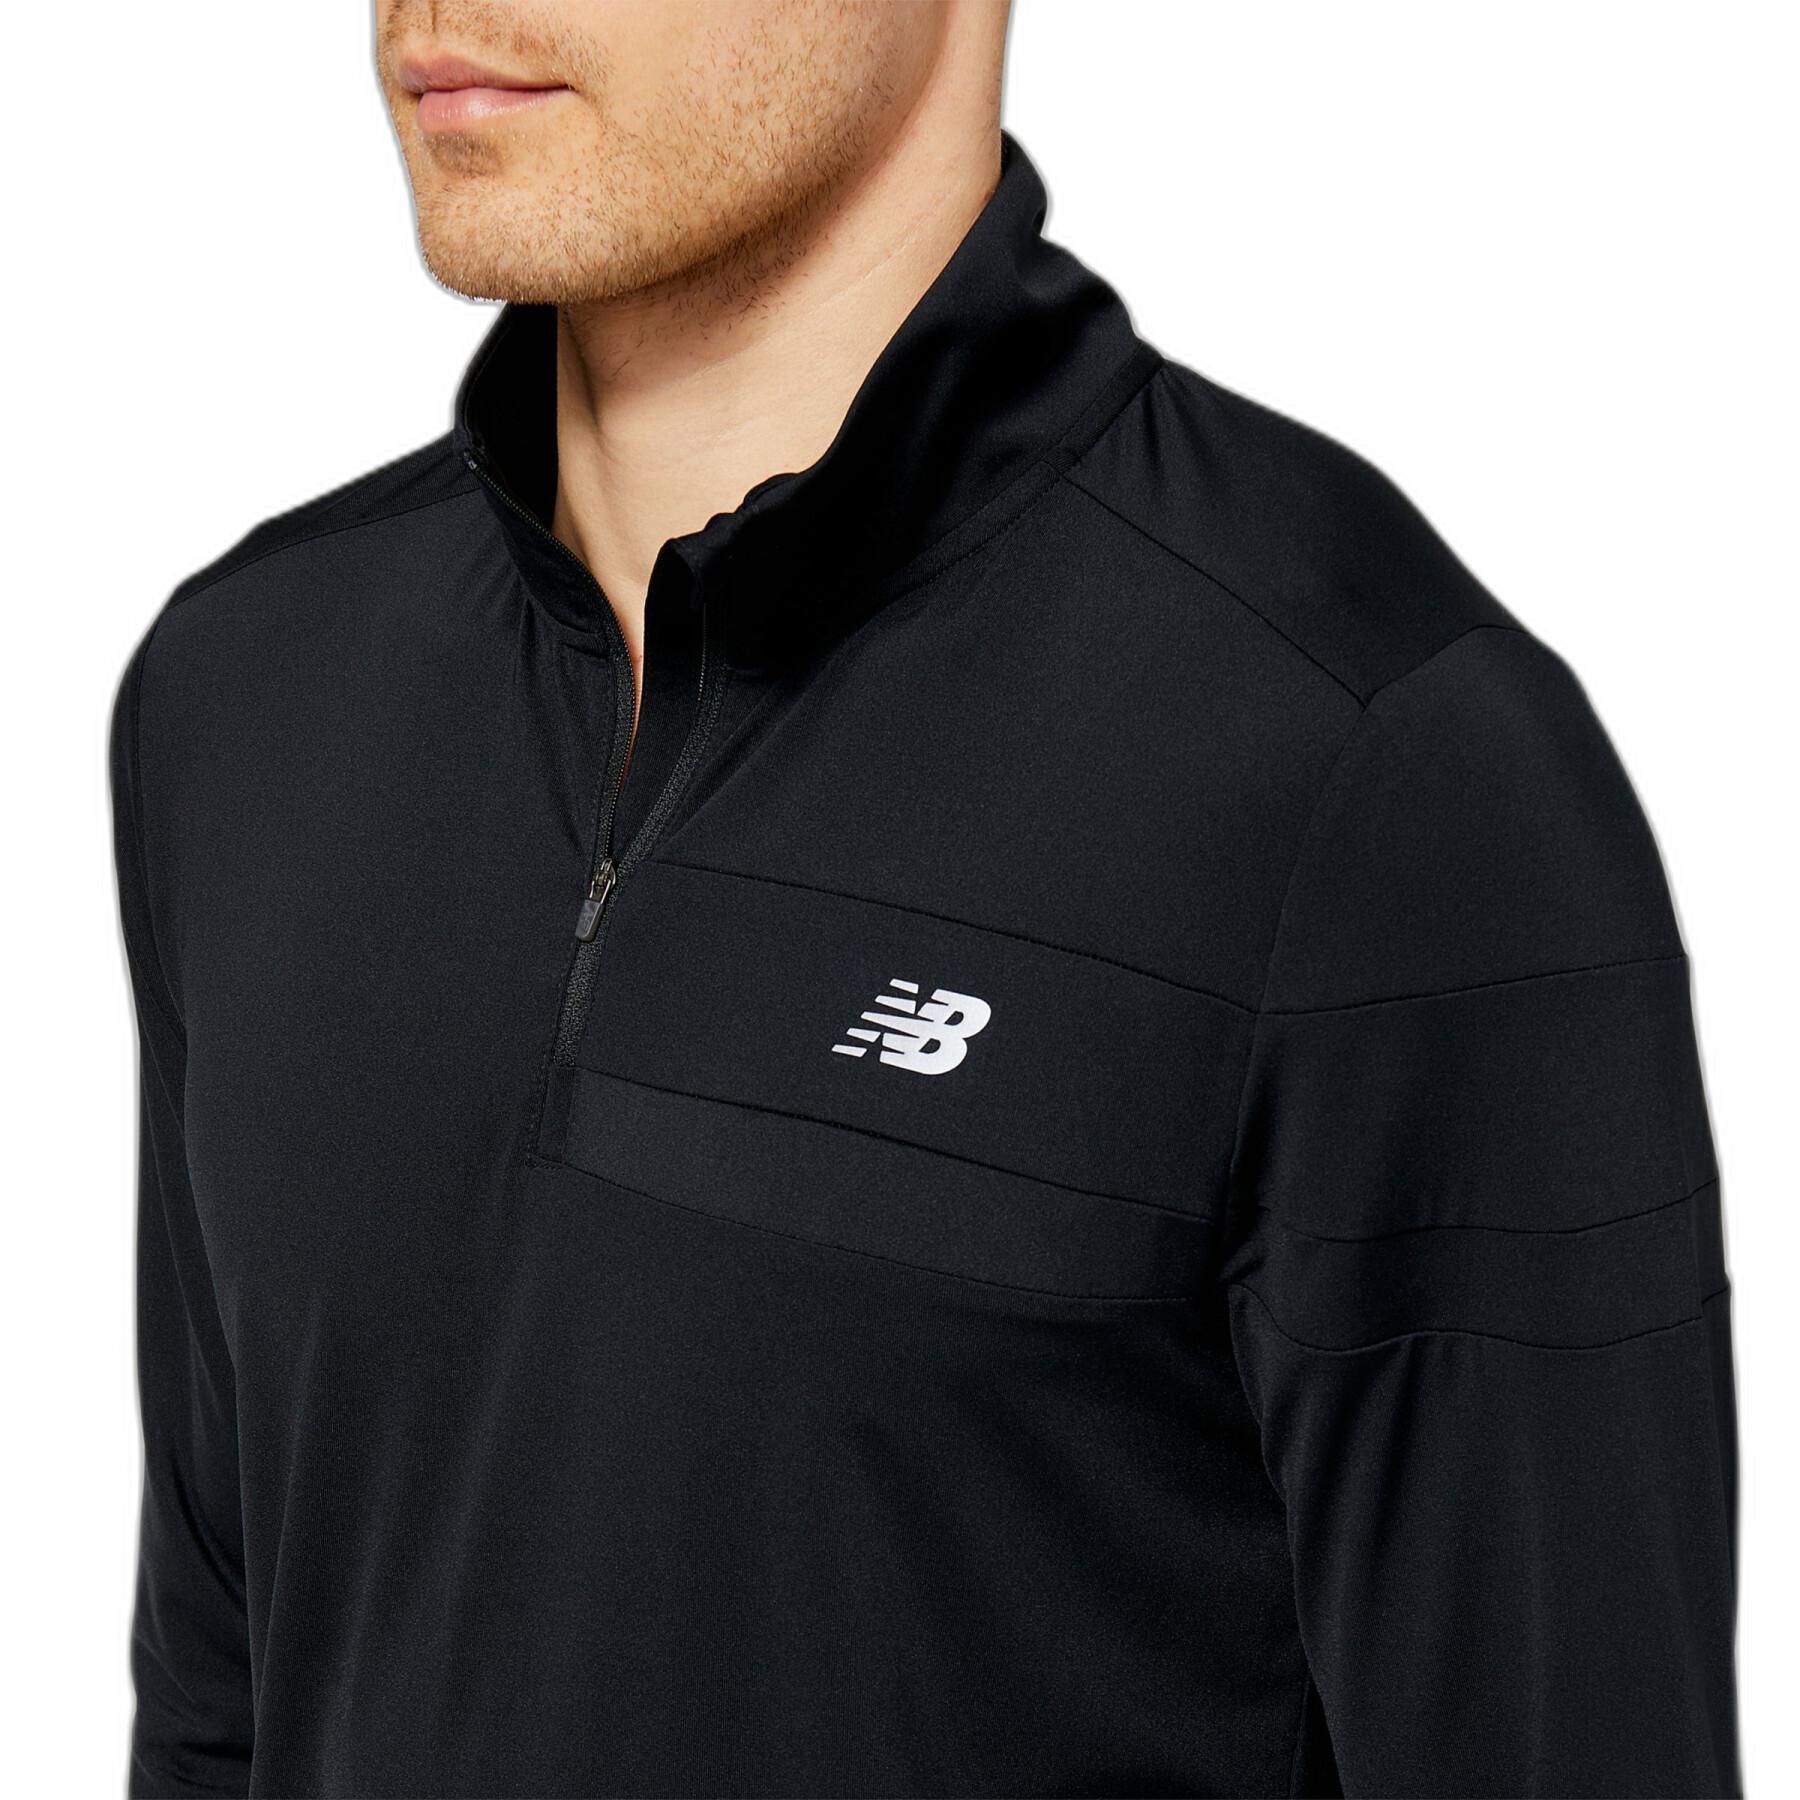 1/2 zip long sleeve jersey New Balance Accelerate